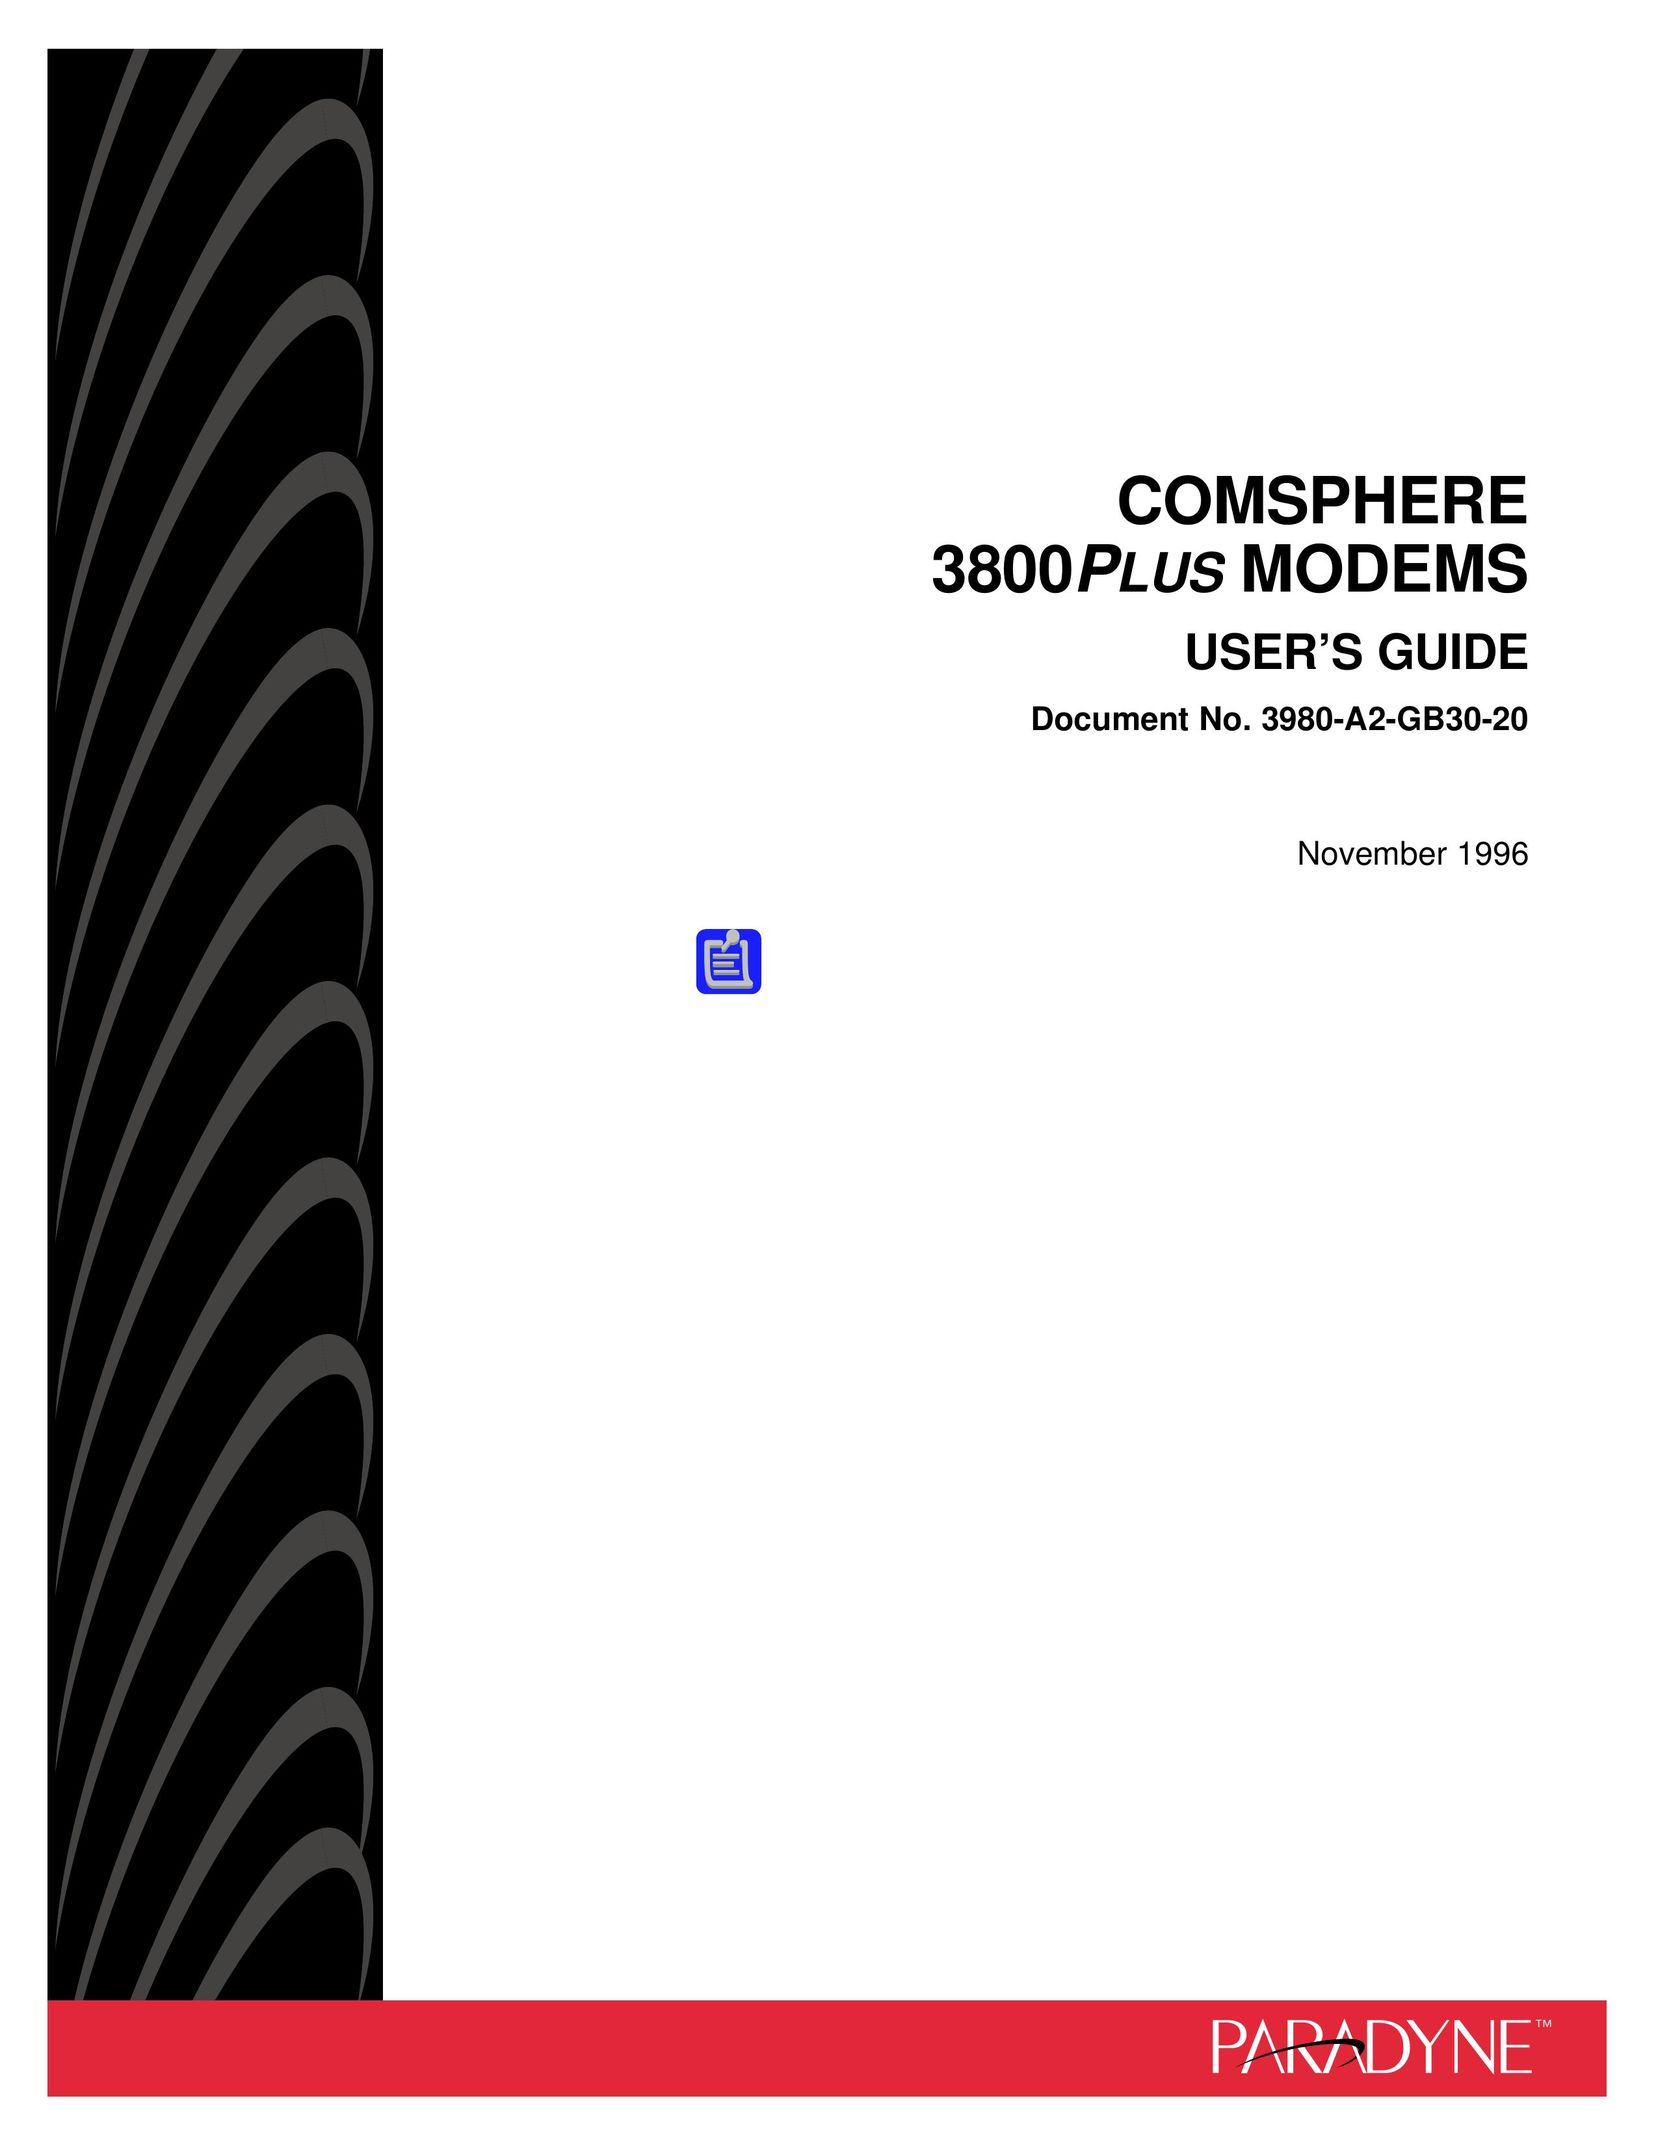 Paradyne 3800PLUS Modem User Manual